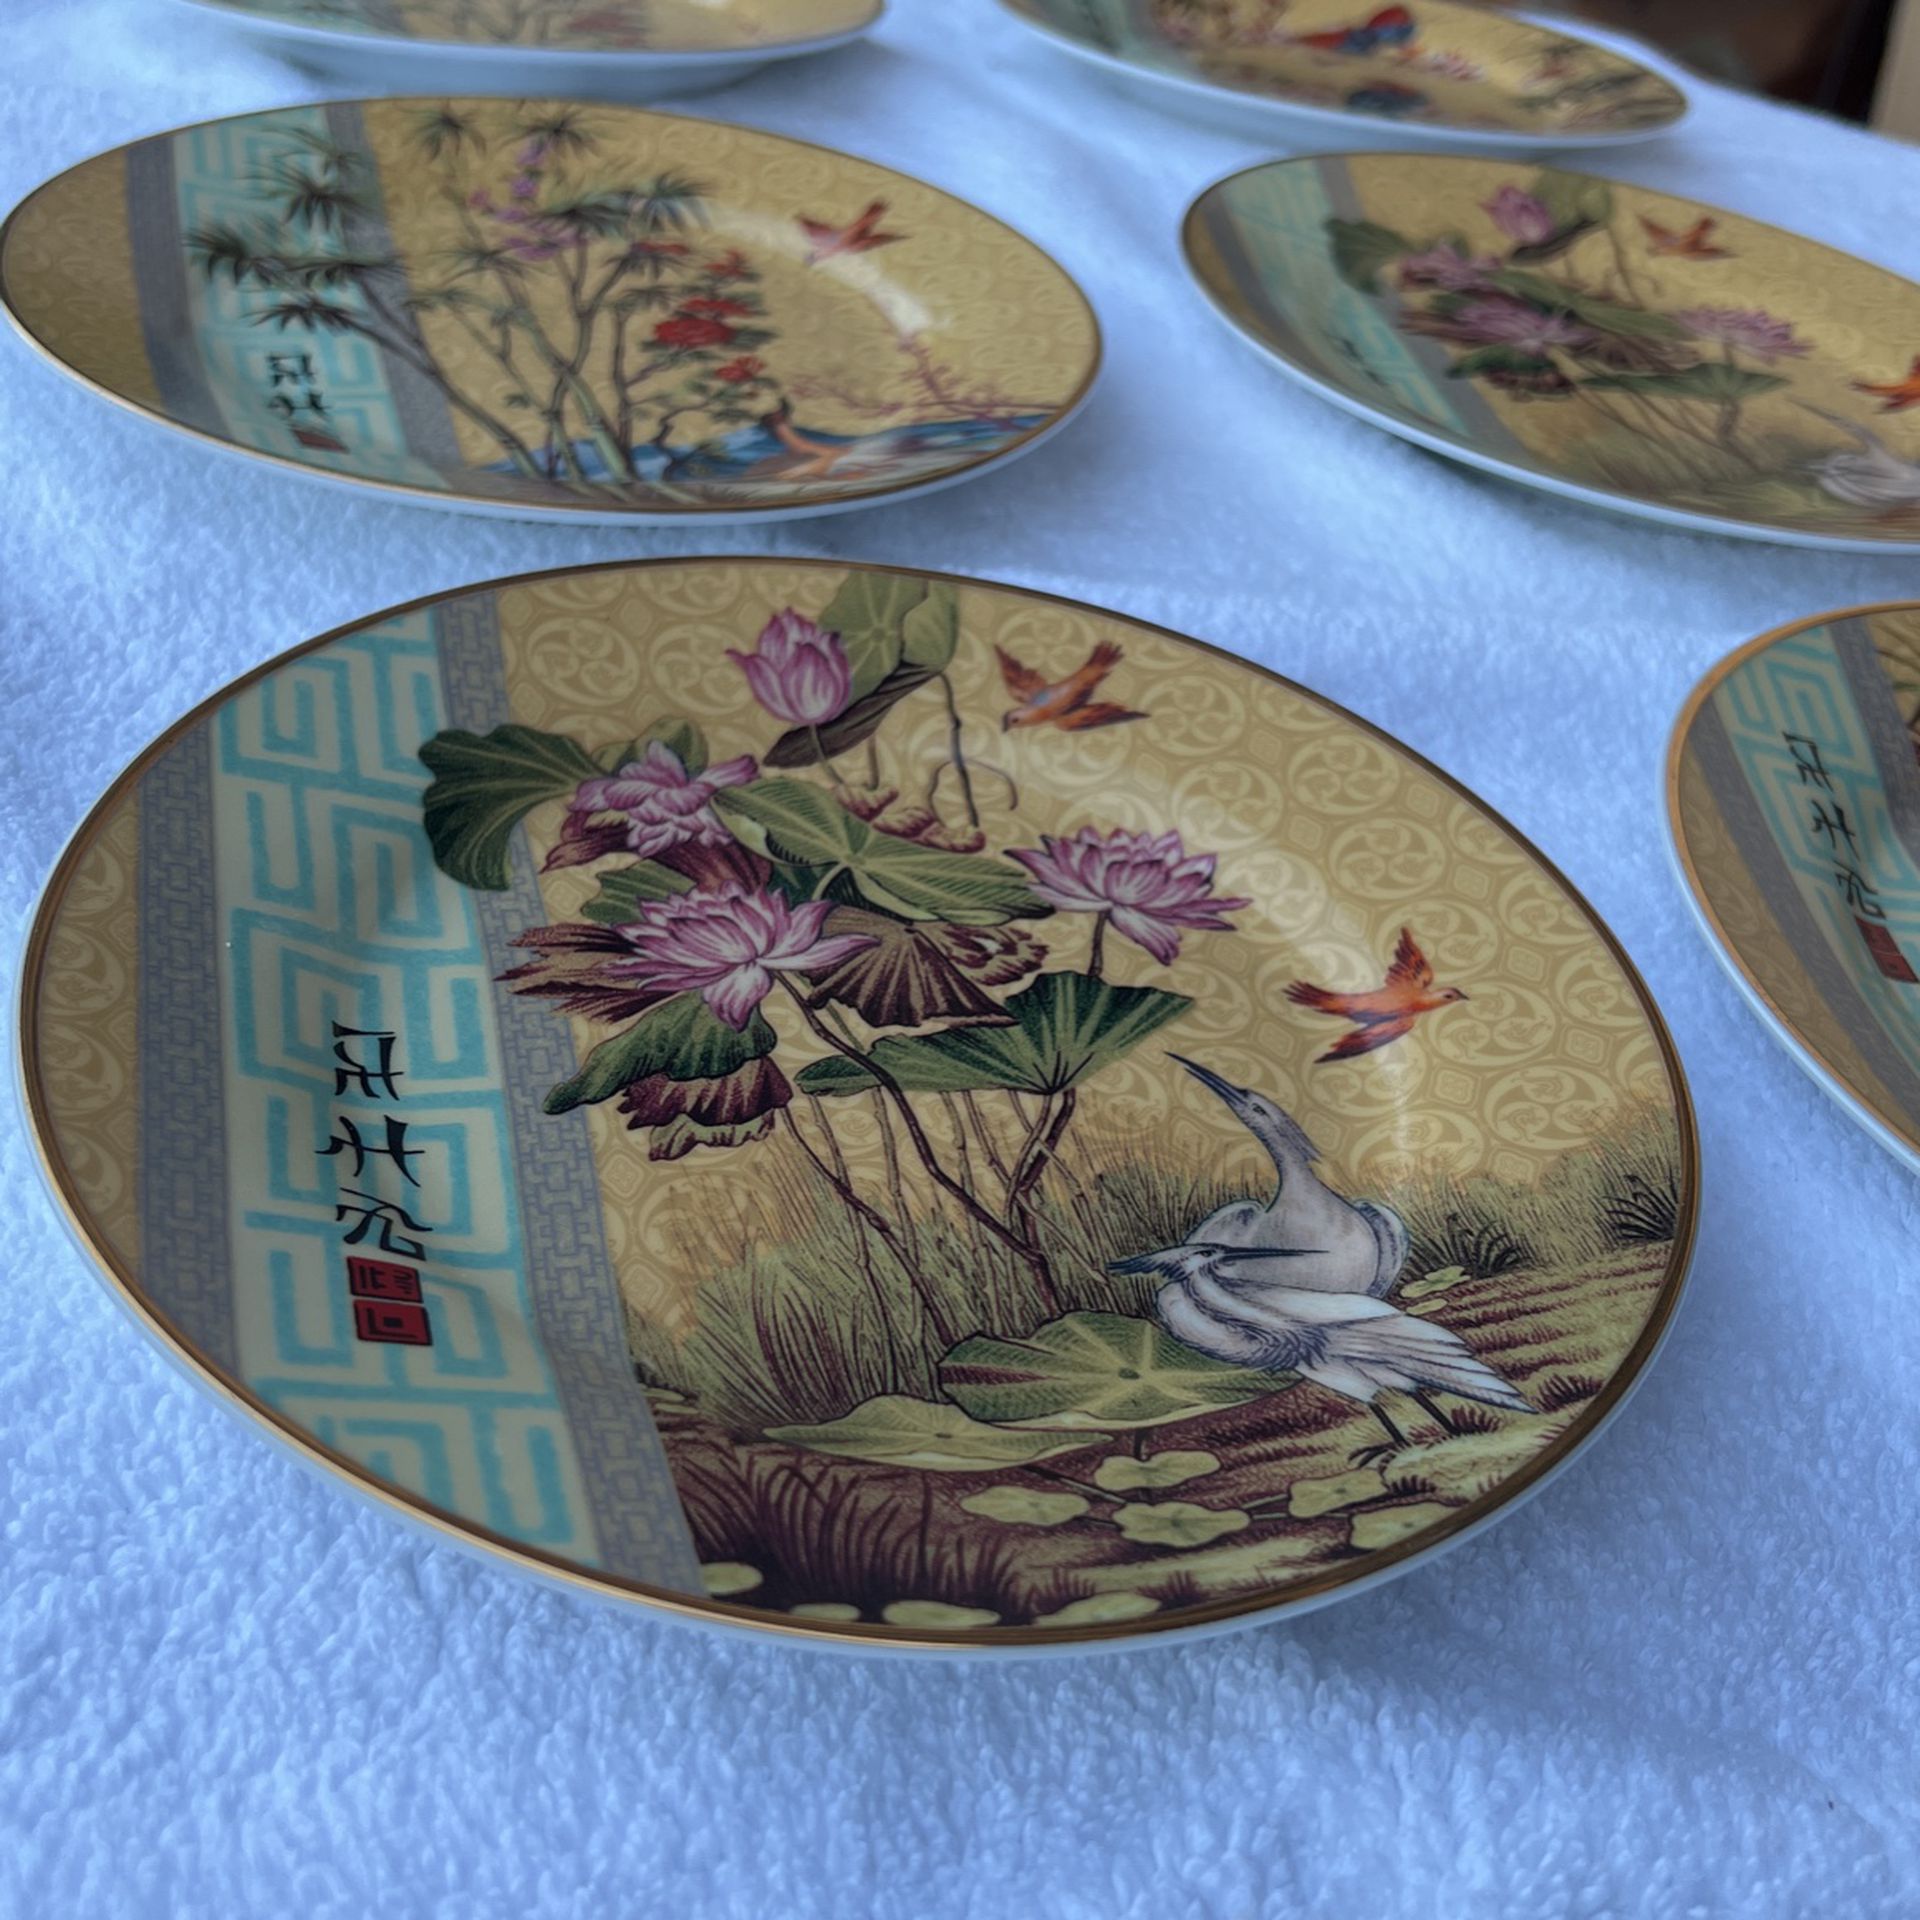 Tea Garden Porcelain Plates 8” - Set of 4 or 8 available